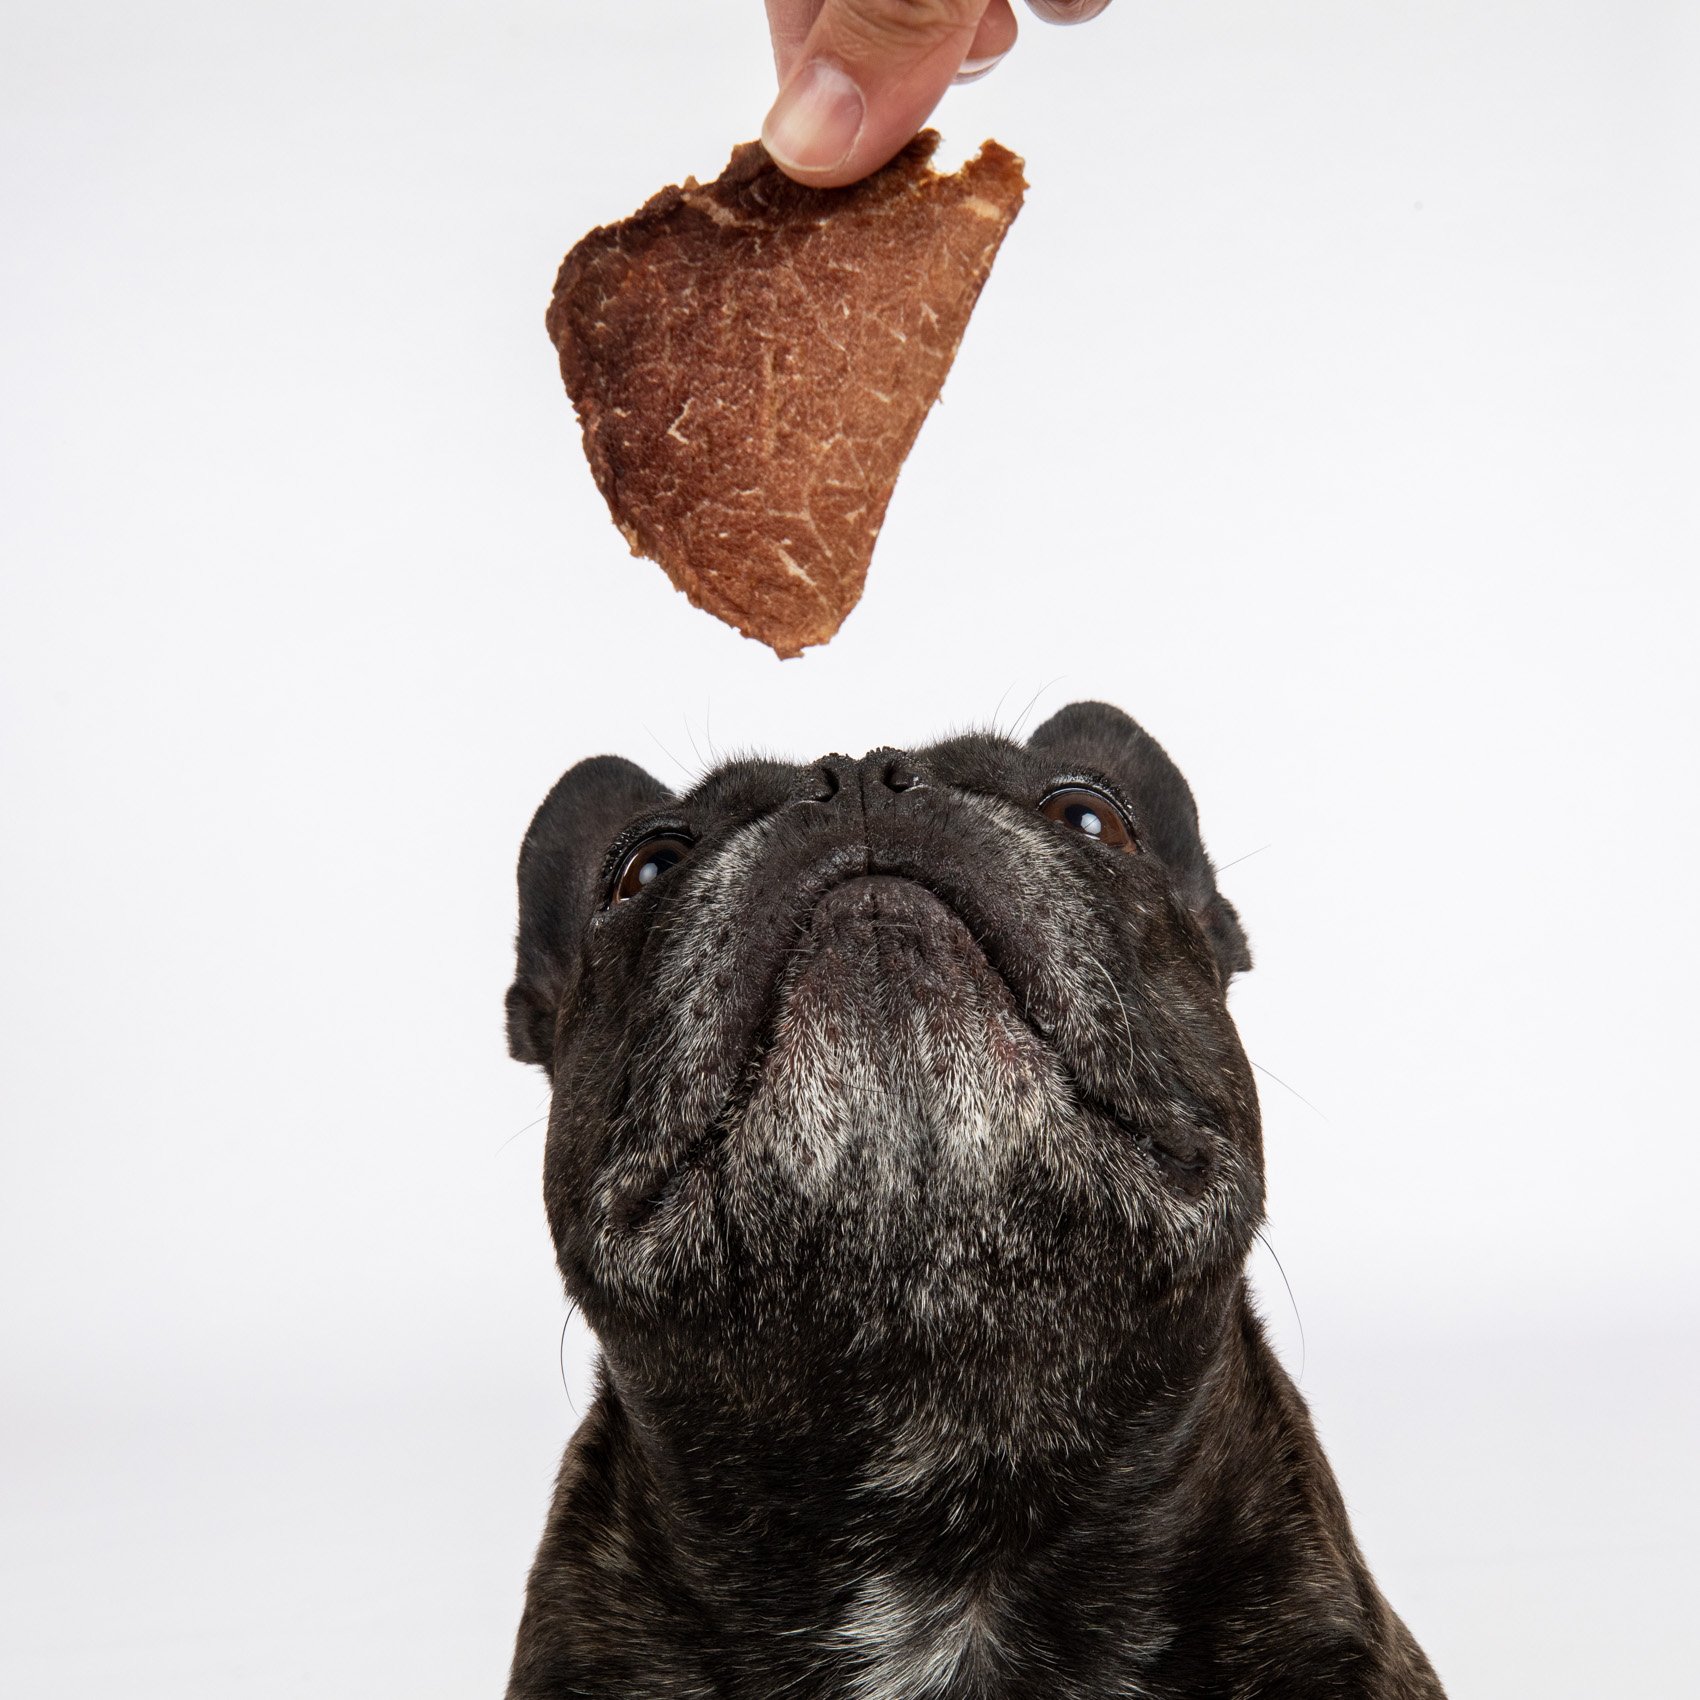 studio-photo-french-bulldog-looking-up-at-meat-treat-7590